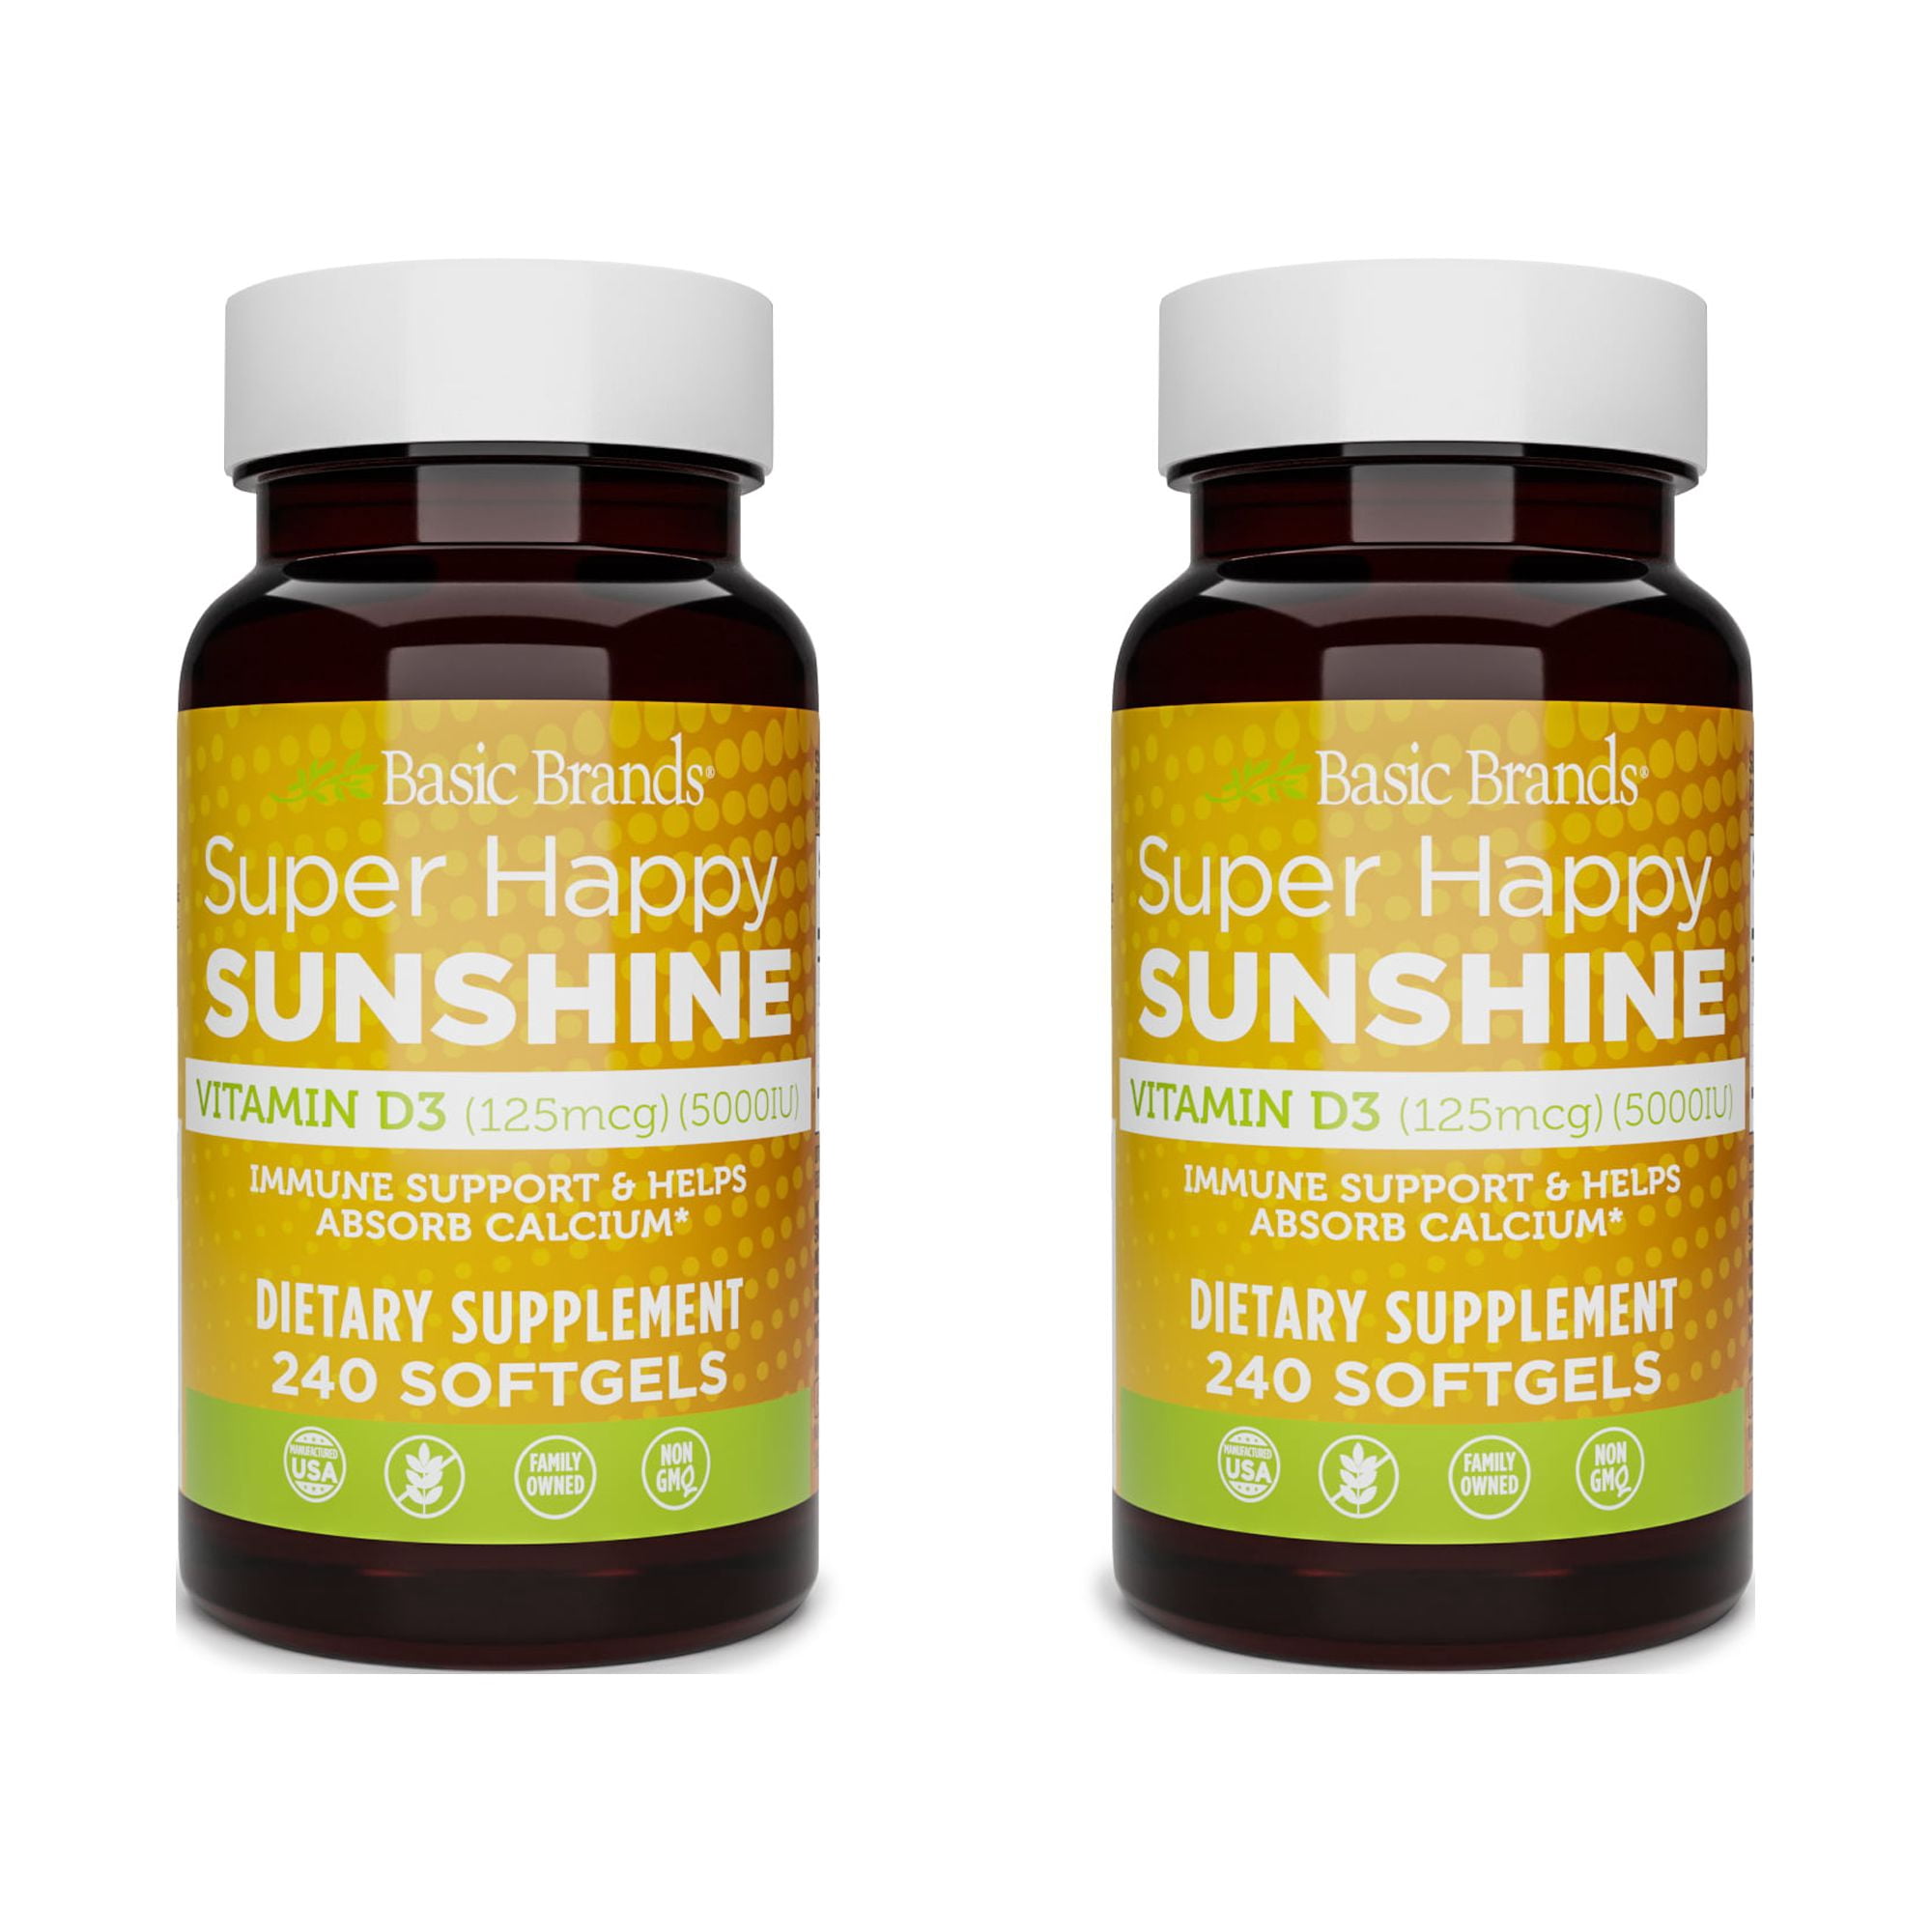 Radiance vitamins. The Sunshine Vitamin. Douglas Skin Focus Vitamin Radiance.